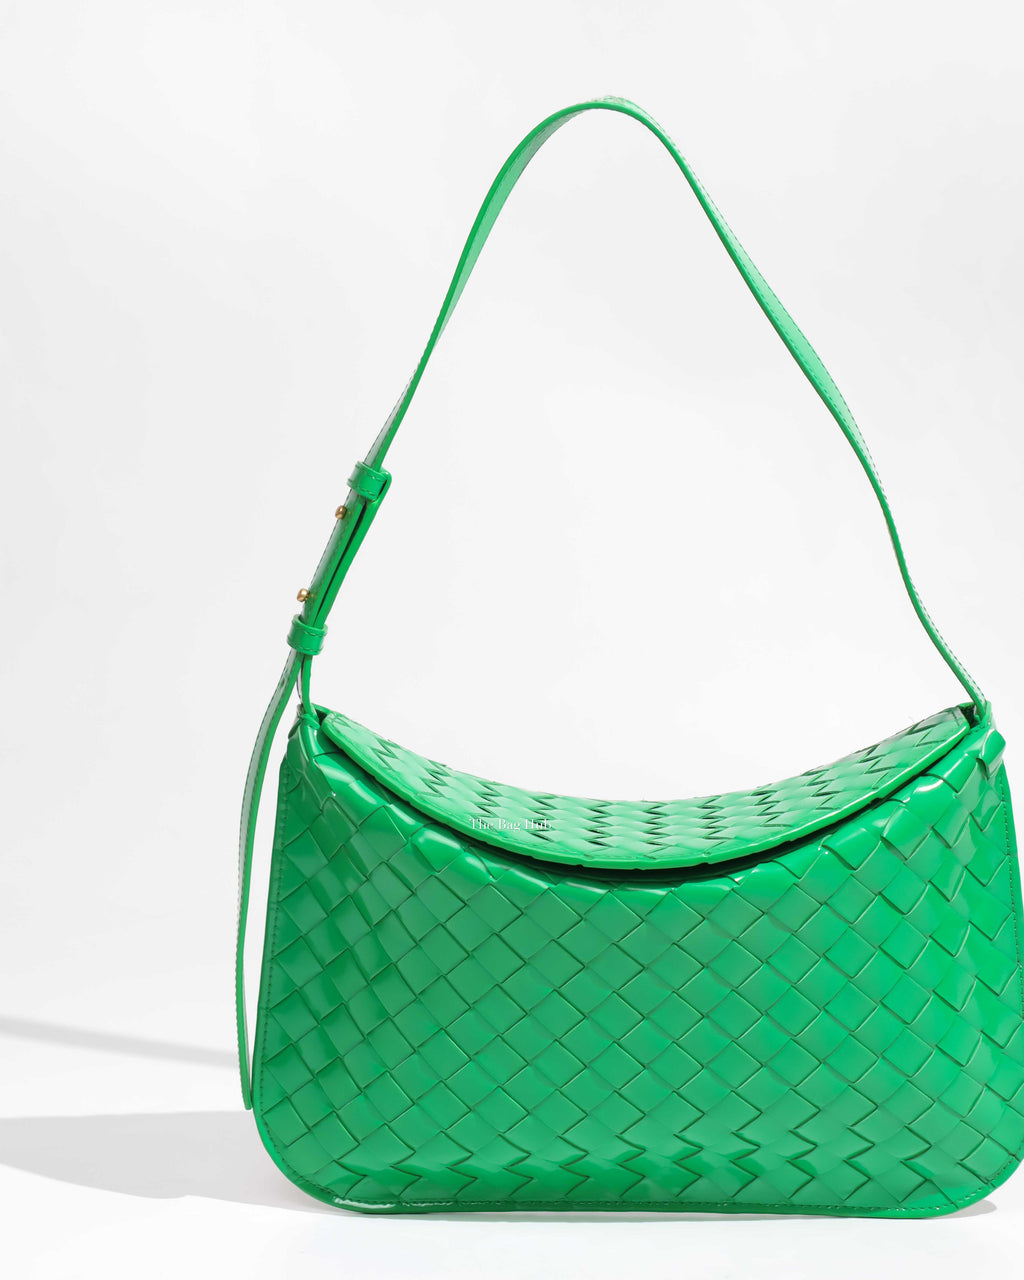 Bottega Veneta Grass Green Patent Leather Intrecciato Small Flap Shoulder Bag-1